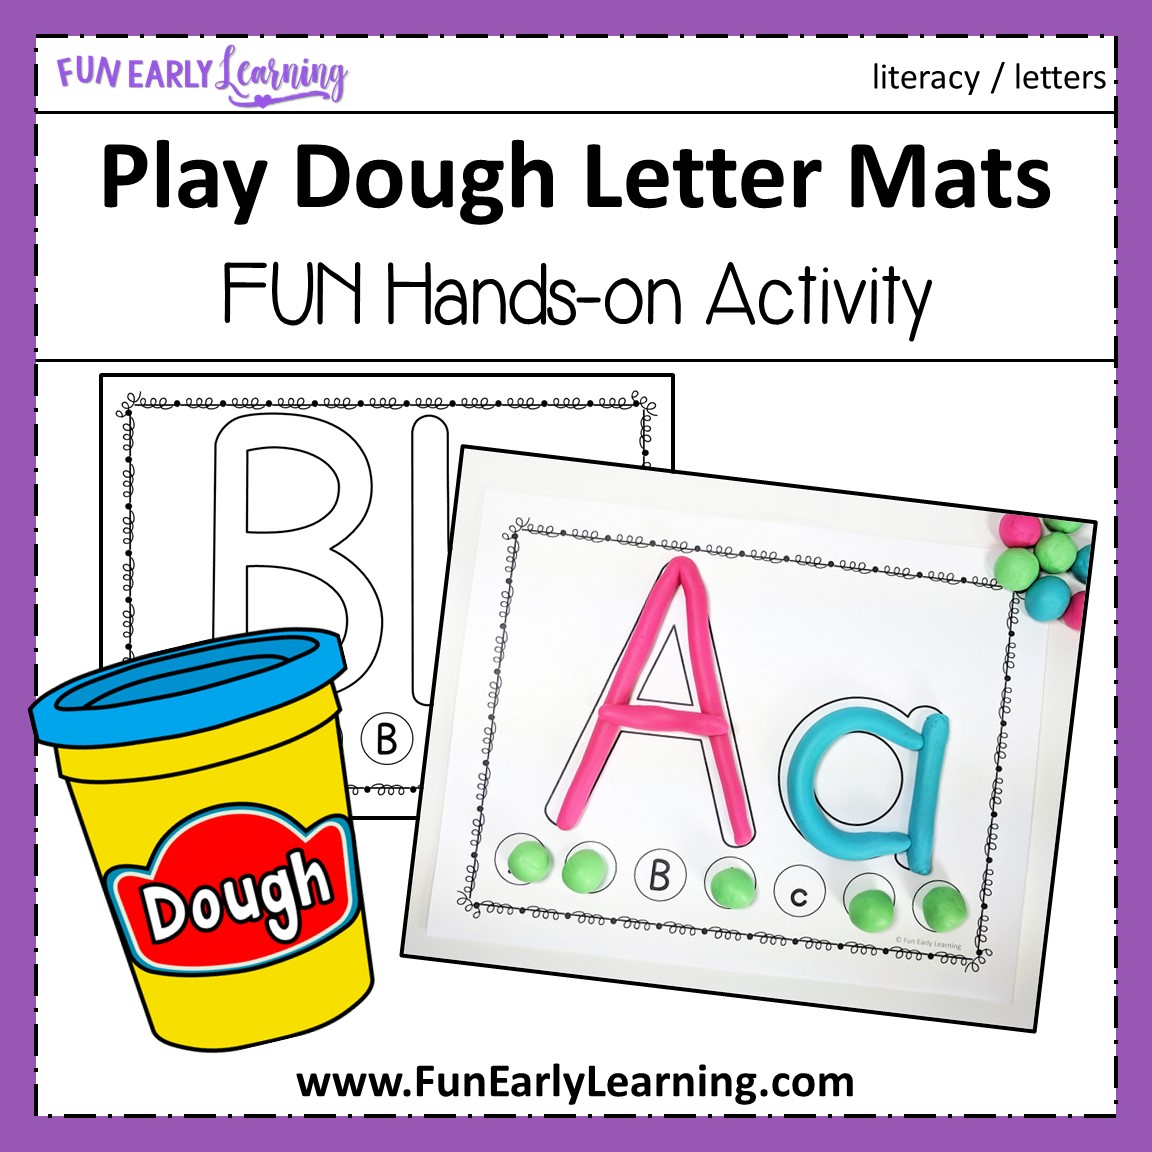 FREE Printable Alphabet Play Dough Mats for Preschool